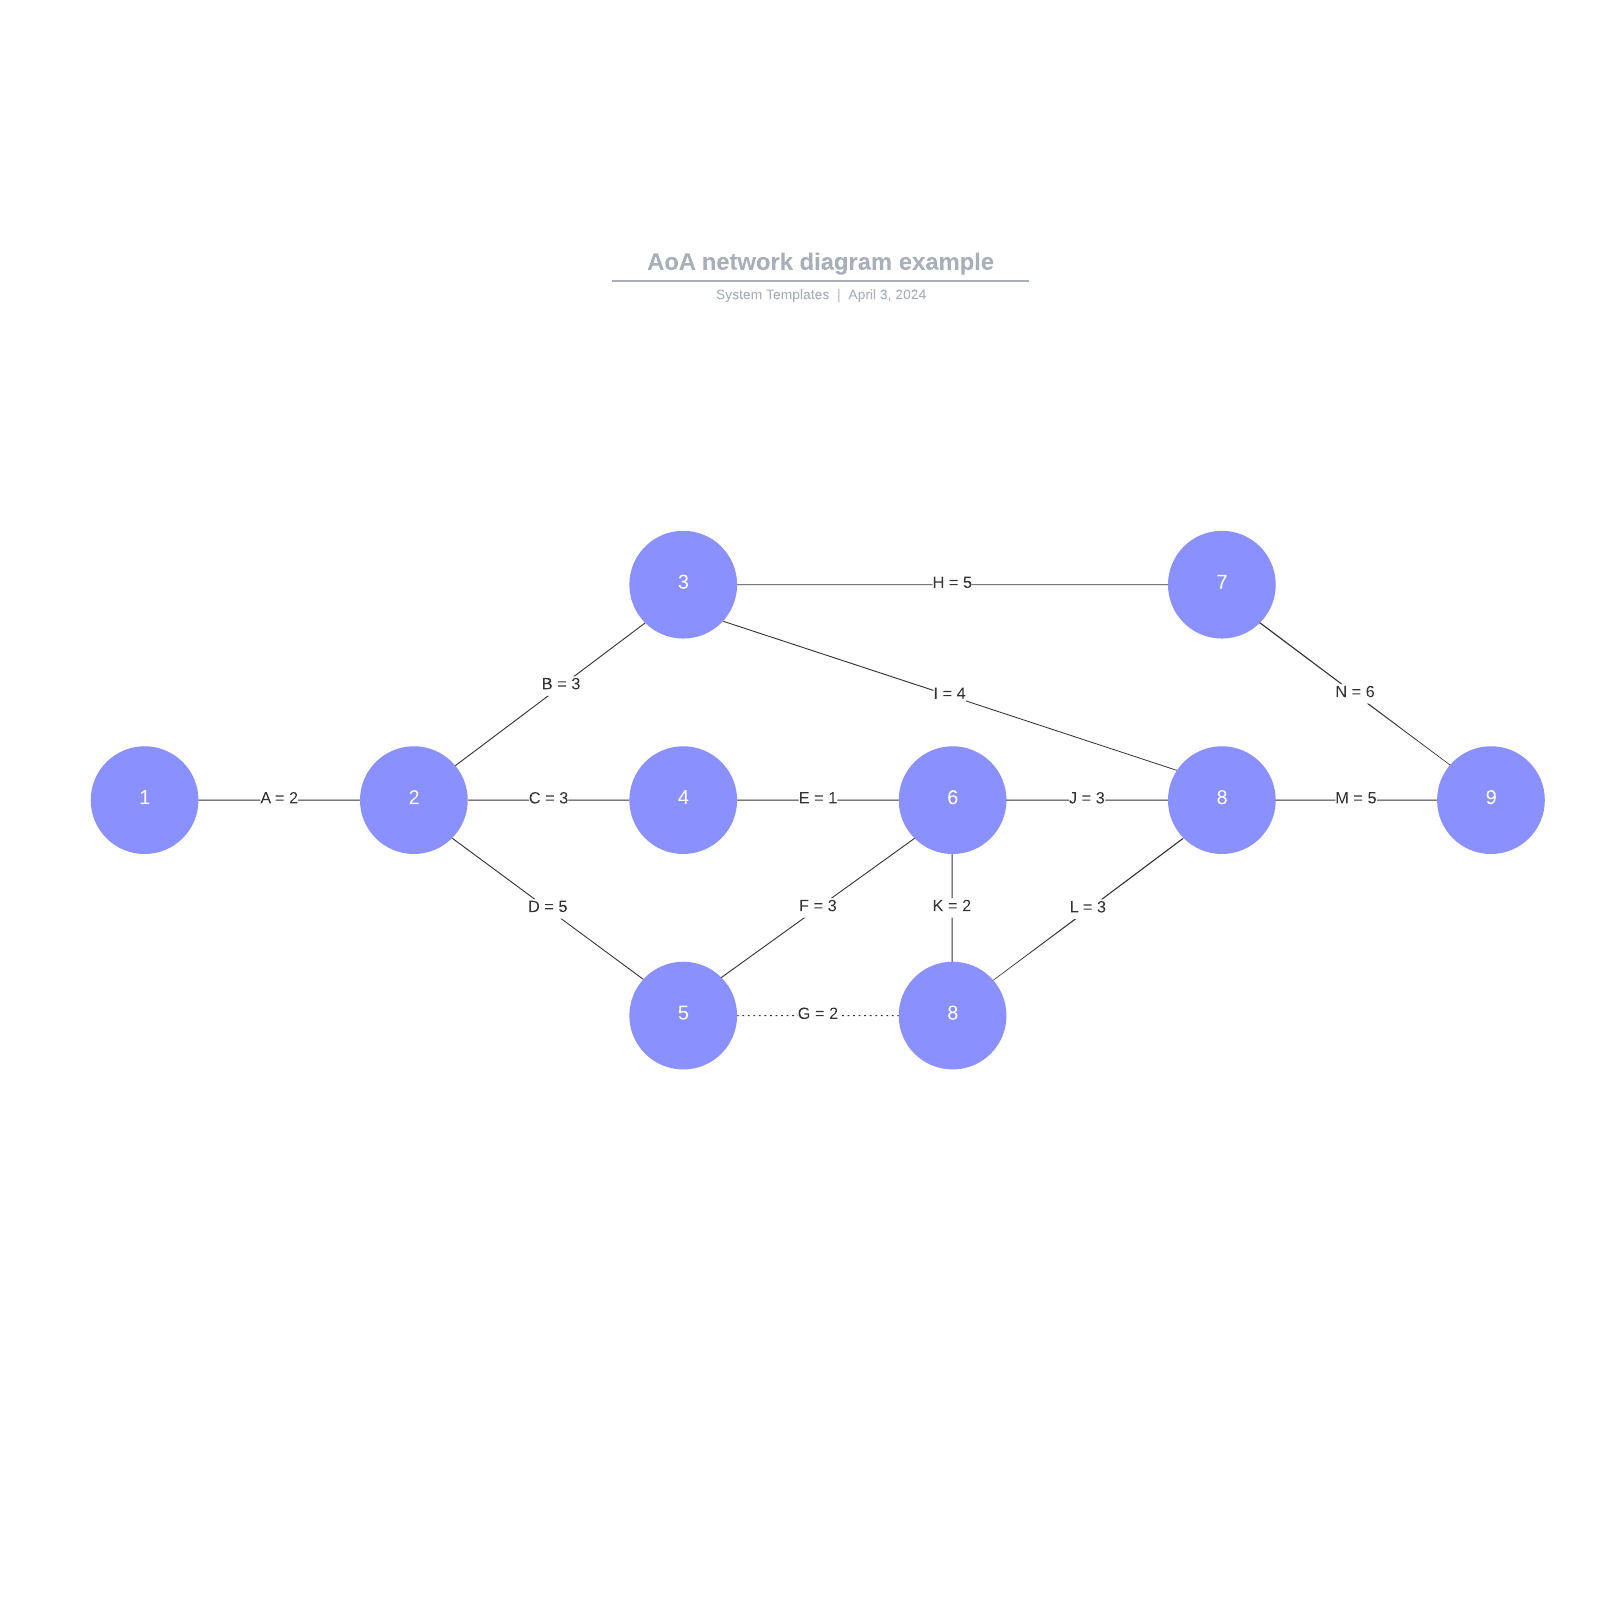 AoA network diagram example example